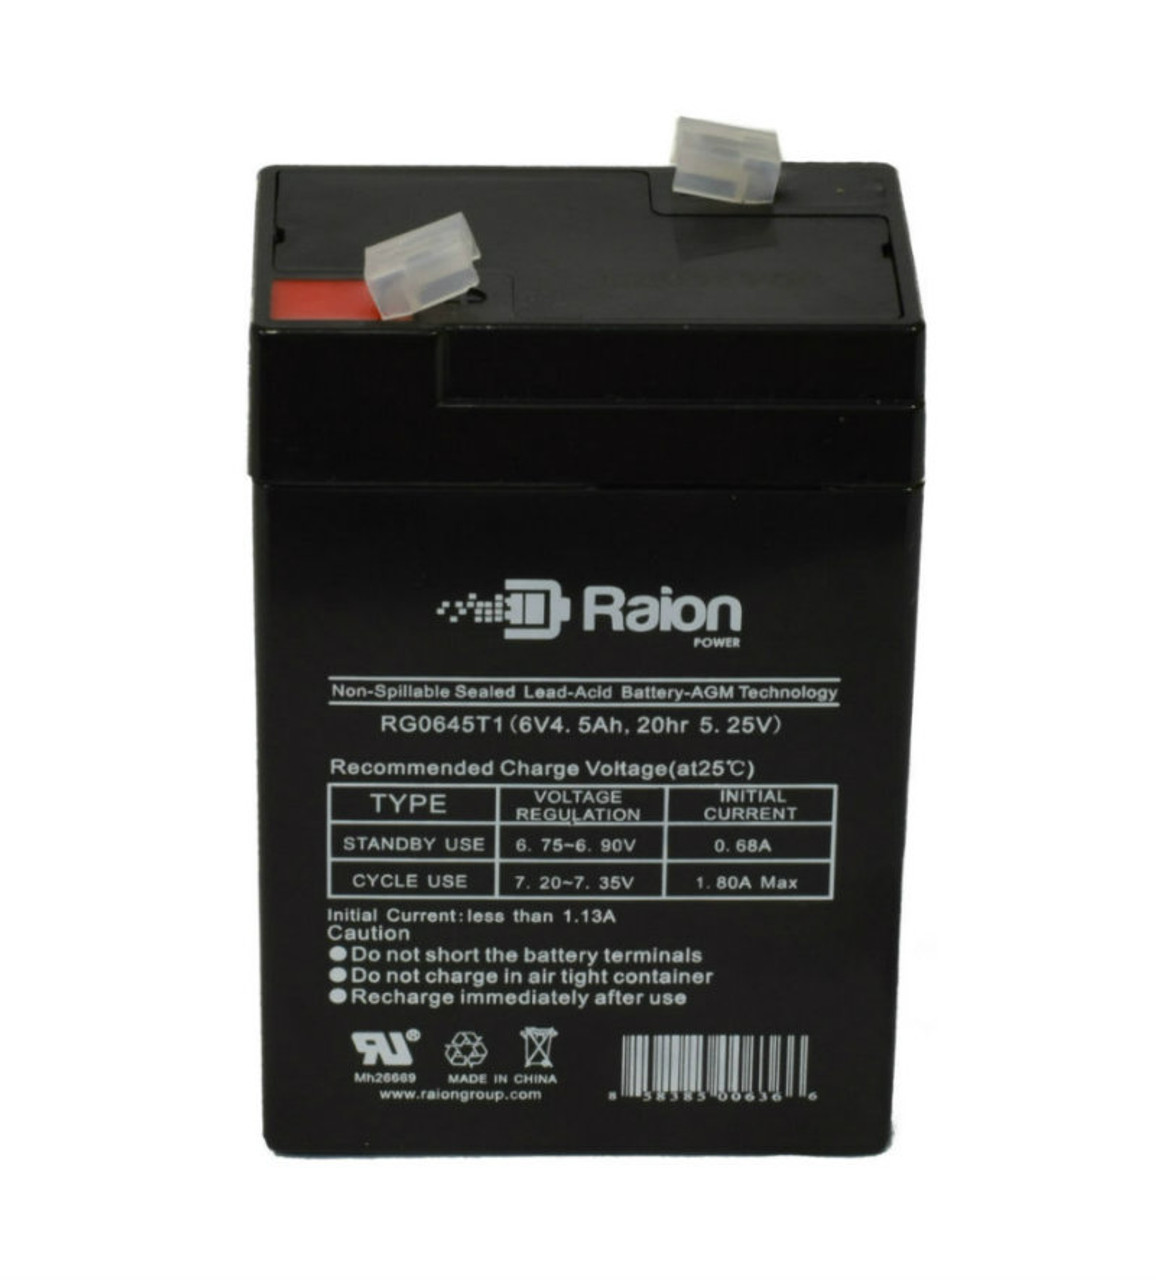 Raion Power RG0645T1 Replacement Battery Cartridge for Emergi-Lite EM1